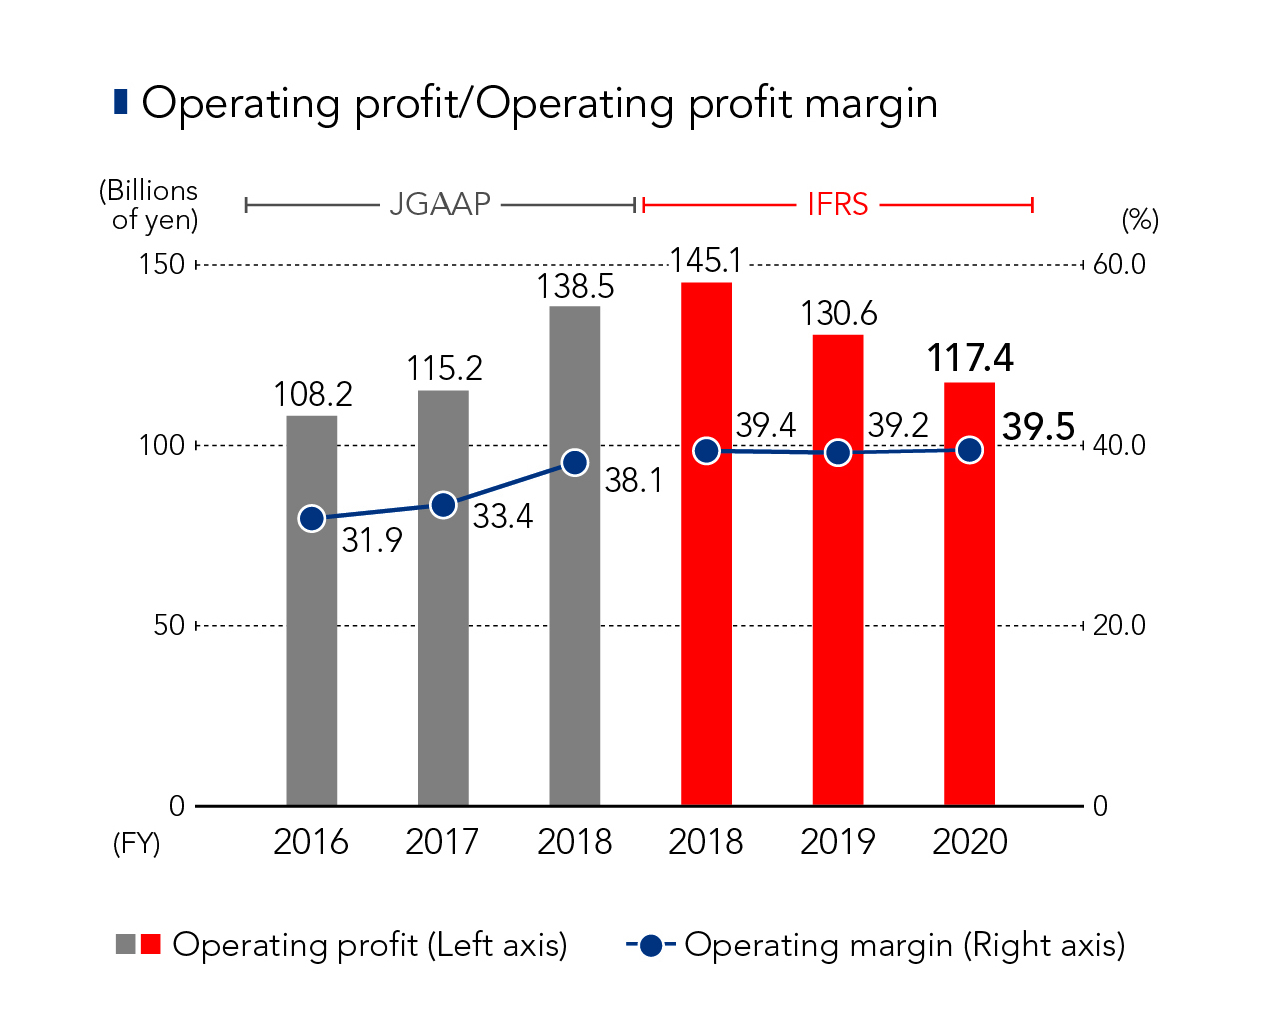 Operating profit/Operating profit margin